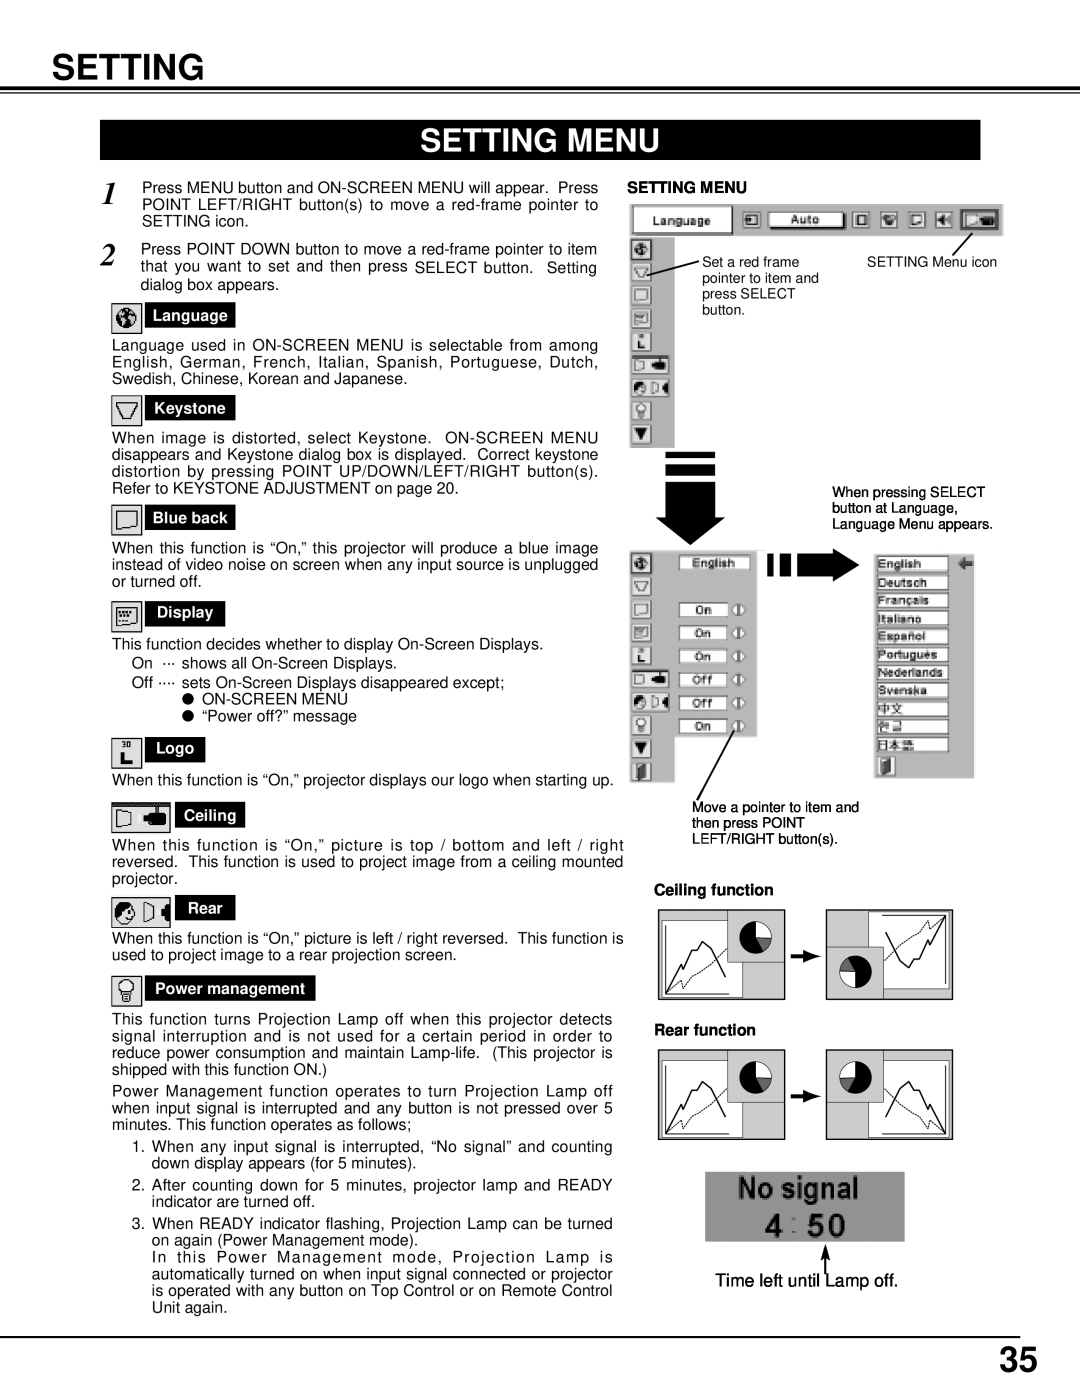 BOXLIGHT MP-42T manual Setting Menu, Ceiling function, Rear function 